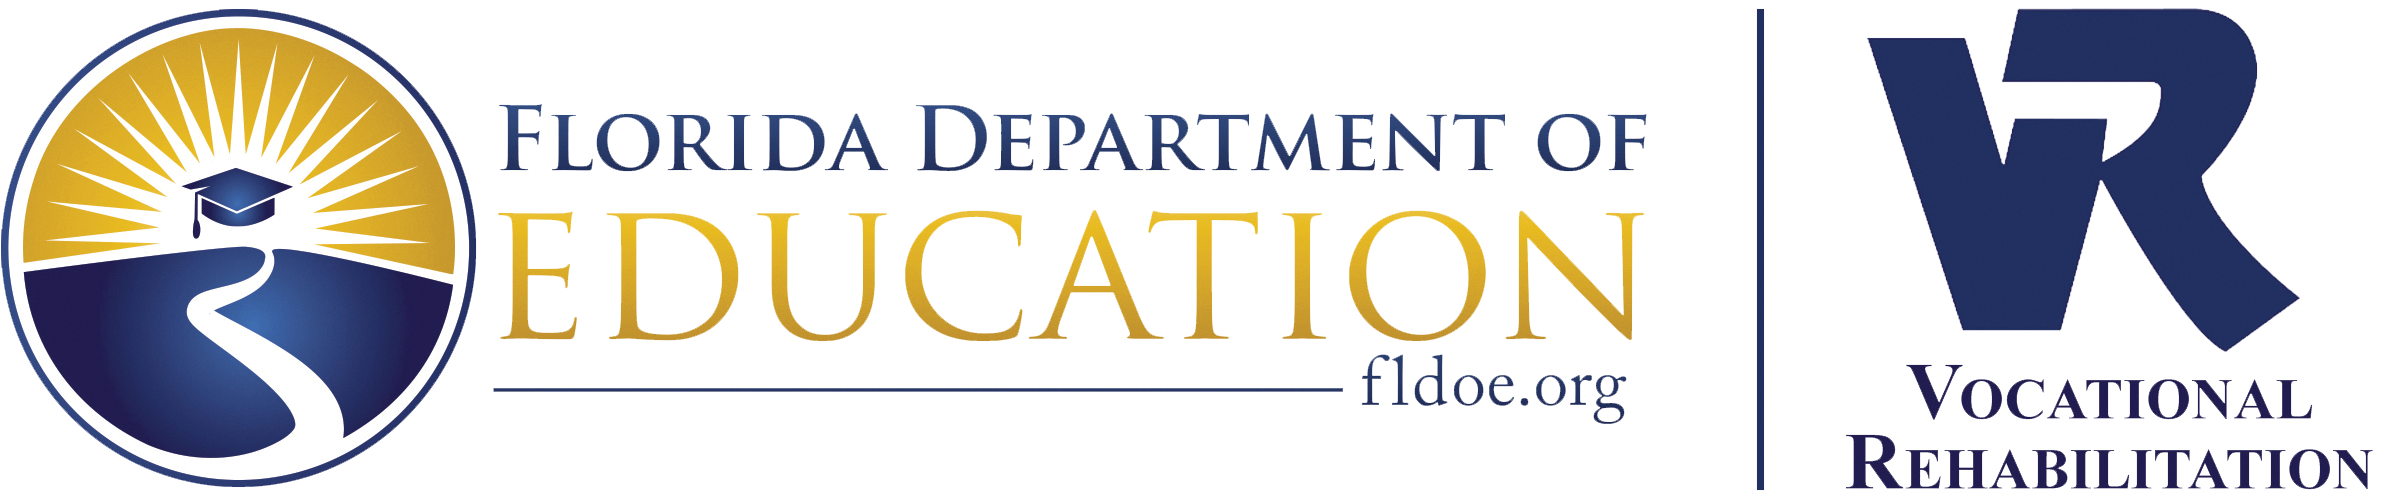 Florida Department of Education Vocational Rehabilitation Logo and website fldoe.org